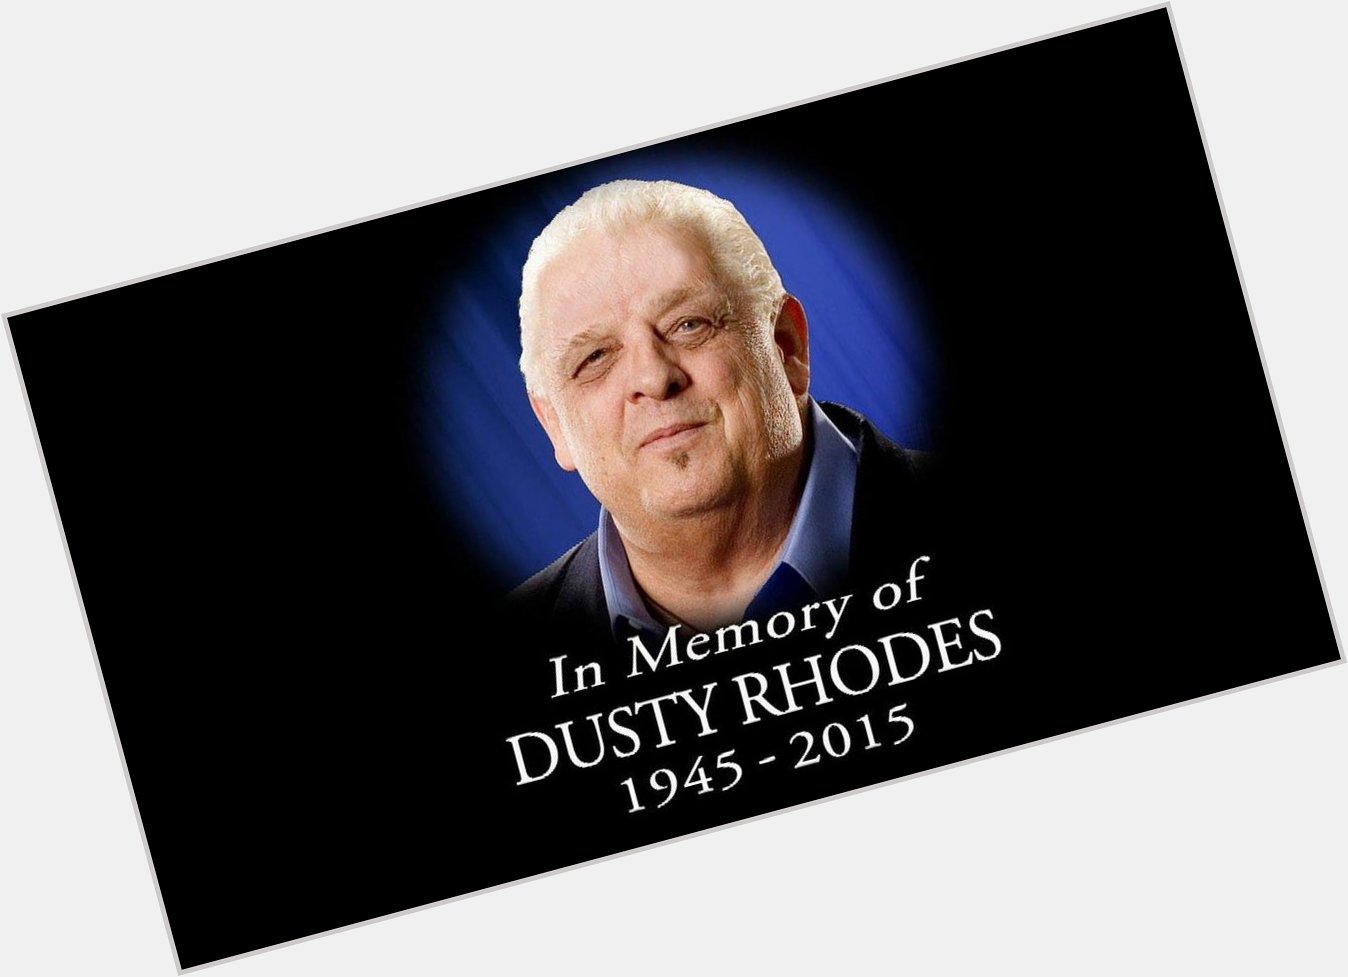 Today would mark Dusty Rhodes\ 70th birthday.
Happy birthday Dusty! 